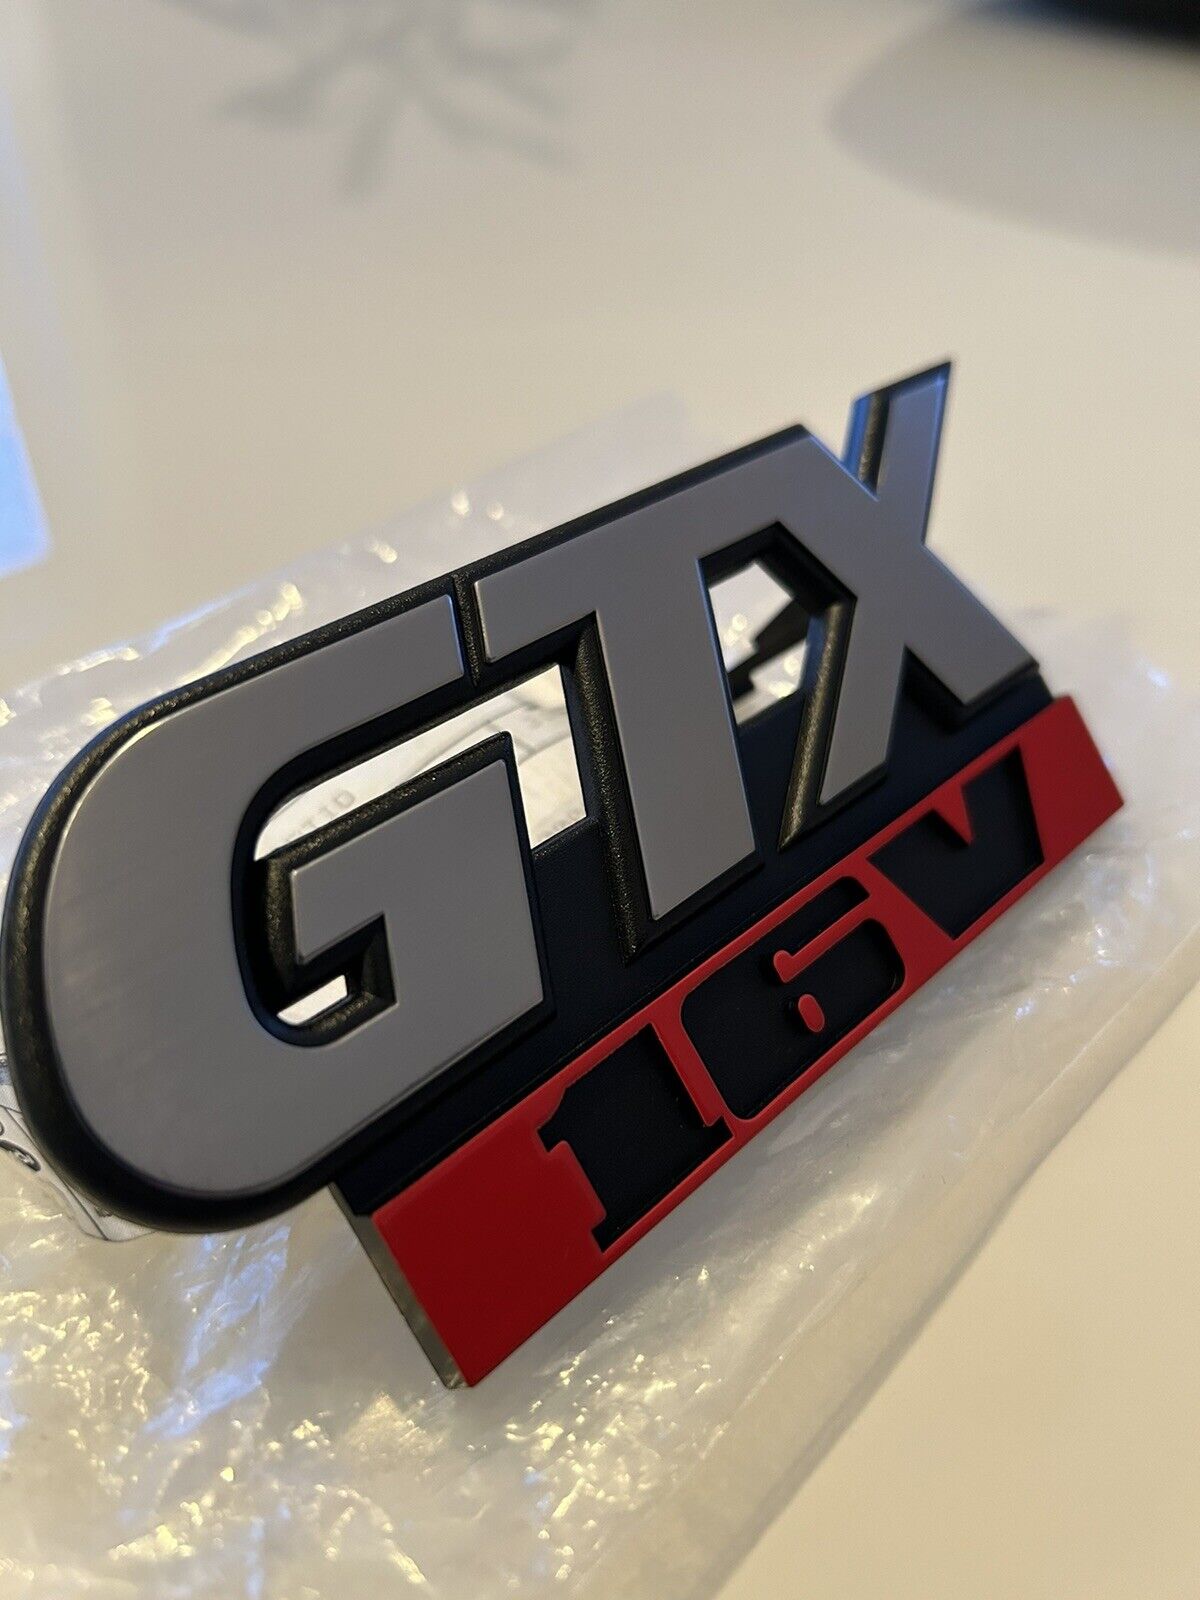 VW GTX 16V front grille badge. OEM NOS new in bag. Very rare